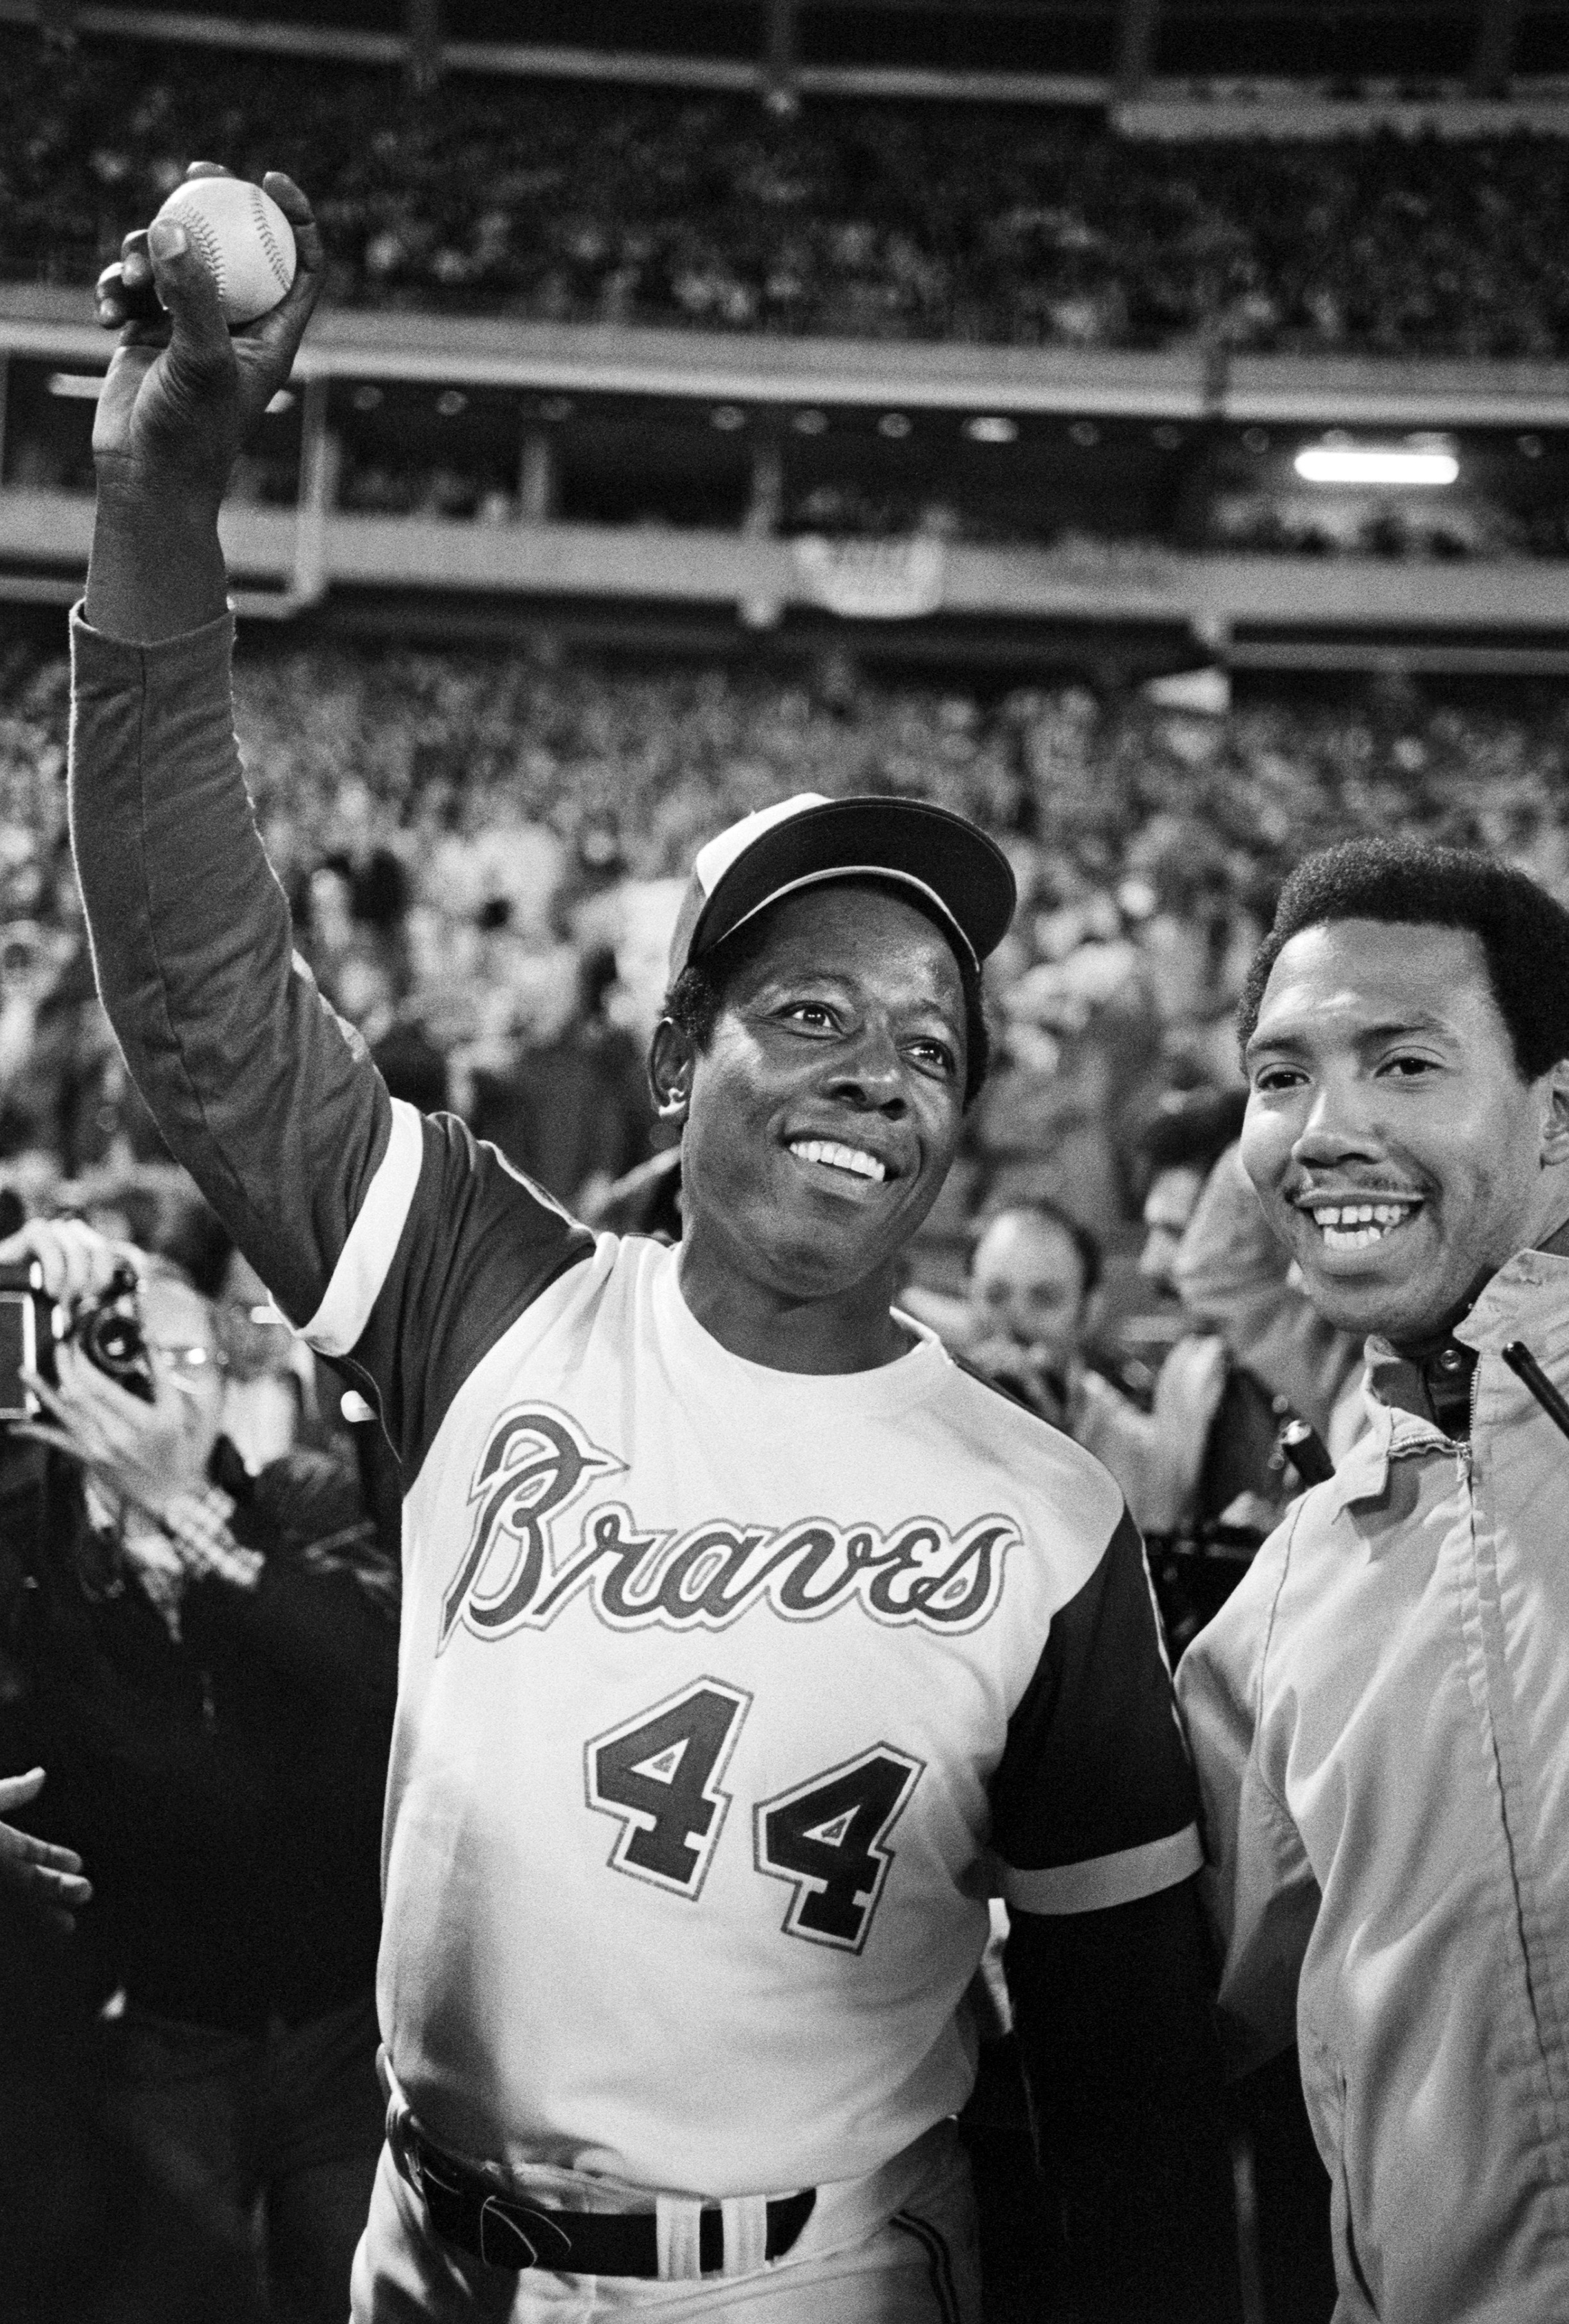 Hank Aaron — A Baseball Legend And Civil Rights Activist